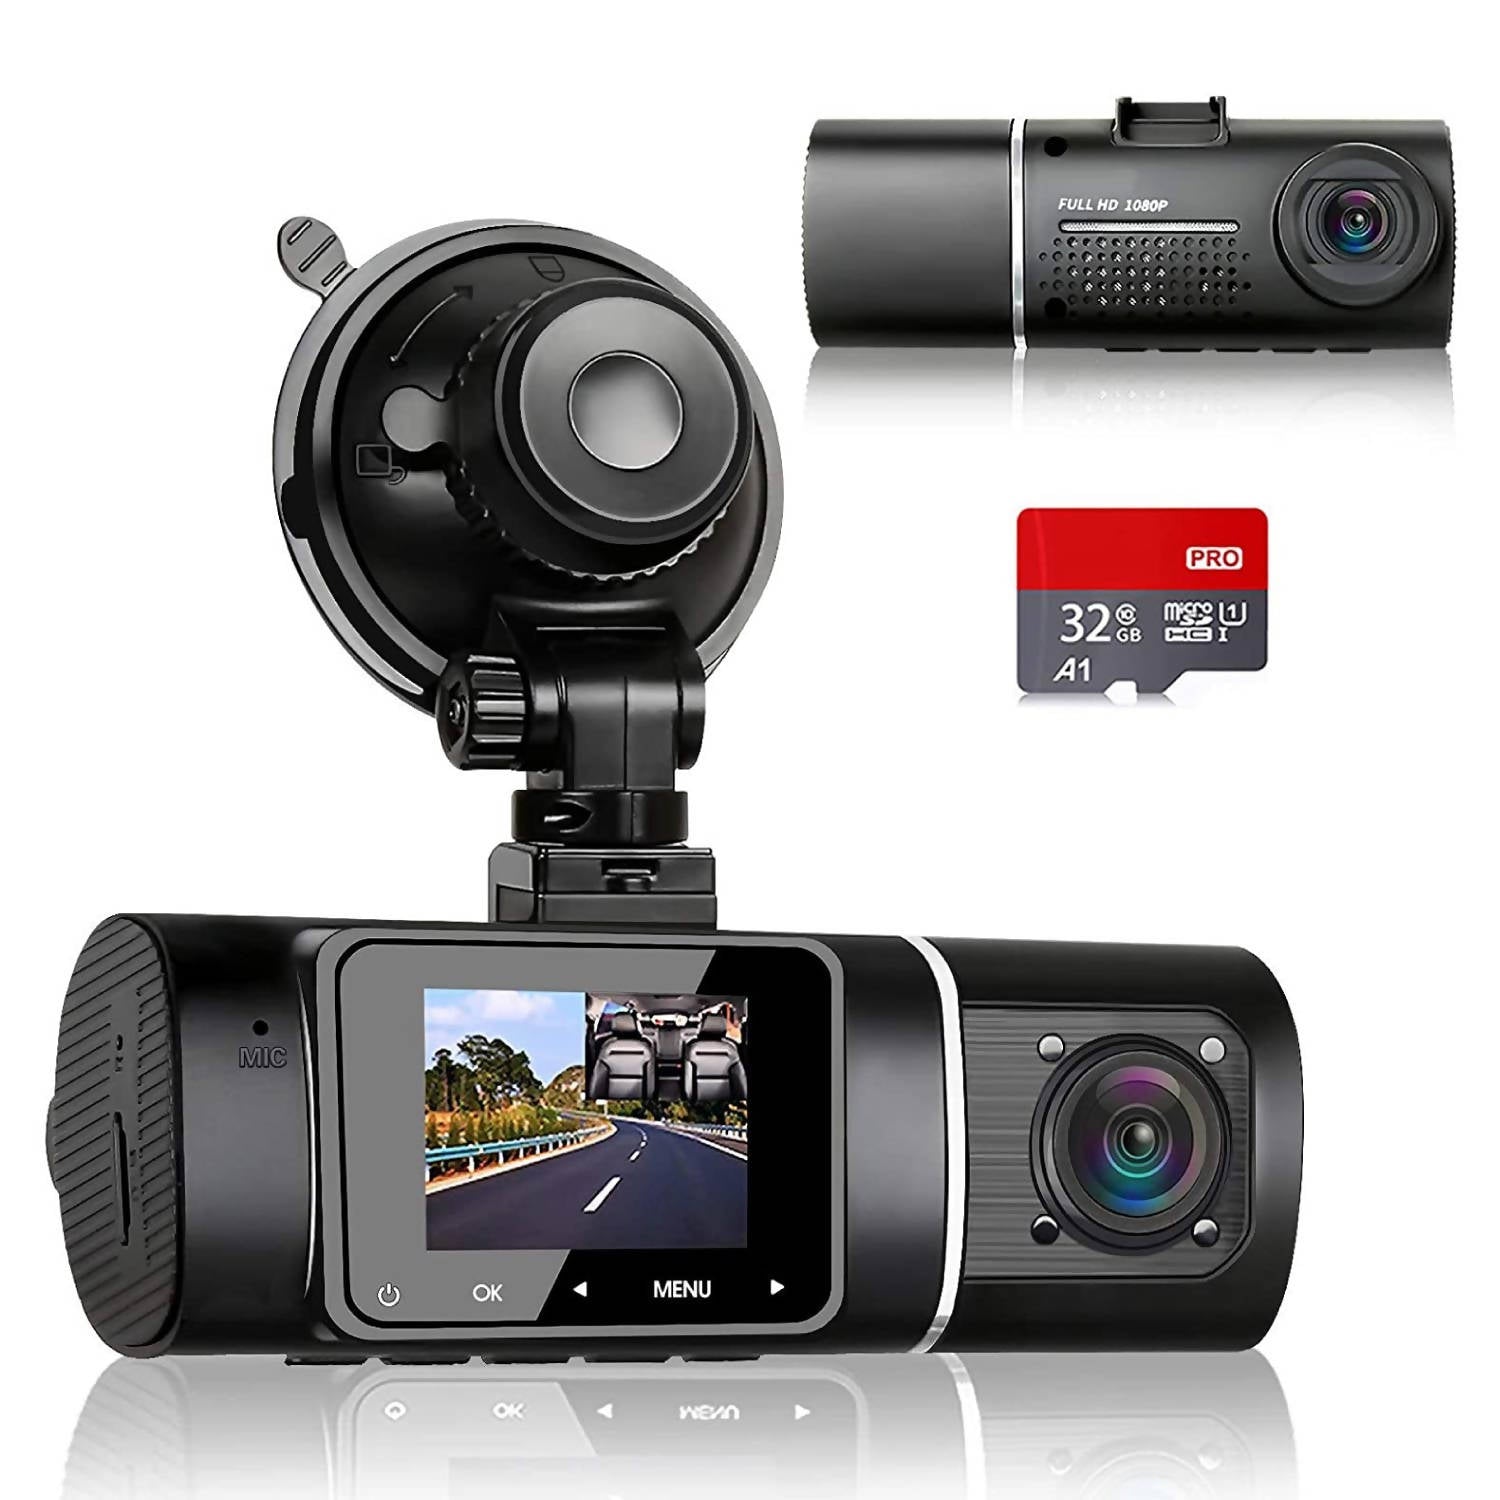 Kaufe 3-Kamera-Objektiv, Auto-DVR, 3-Kanal-Dashcam, HD 1080P, Dash-Kamera,  Dual-Objektiv, Dashcam-Videorecorder, Blackbox, 24-Stunden-Parküberwachung